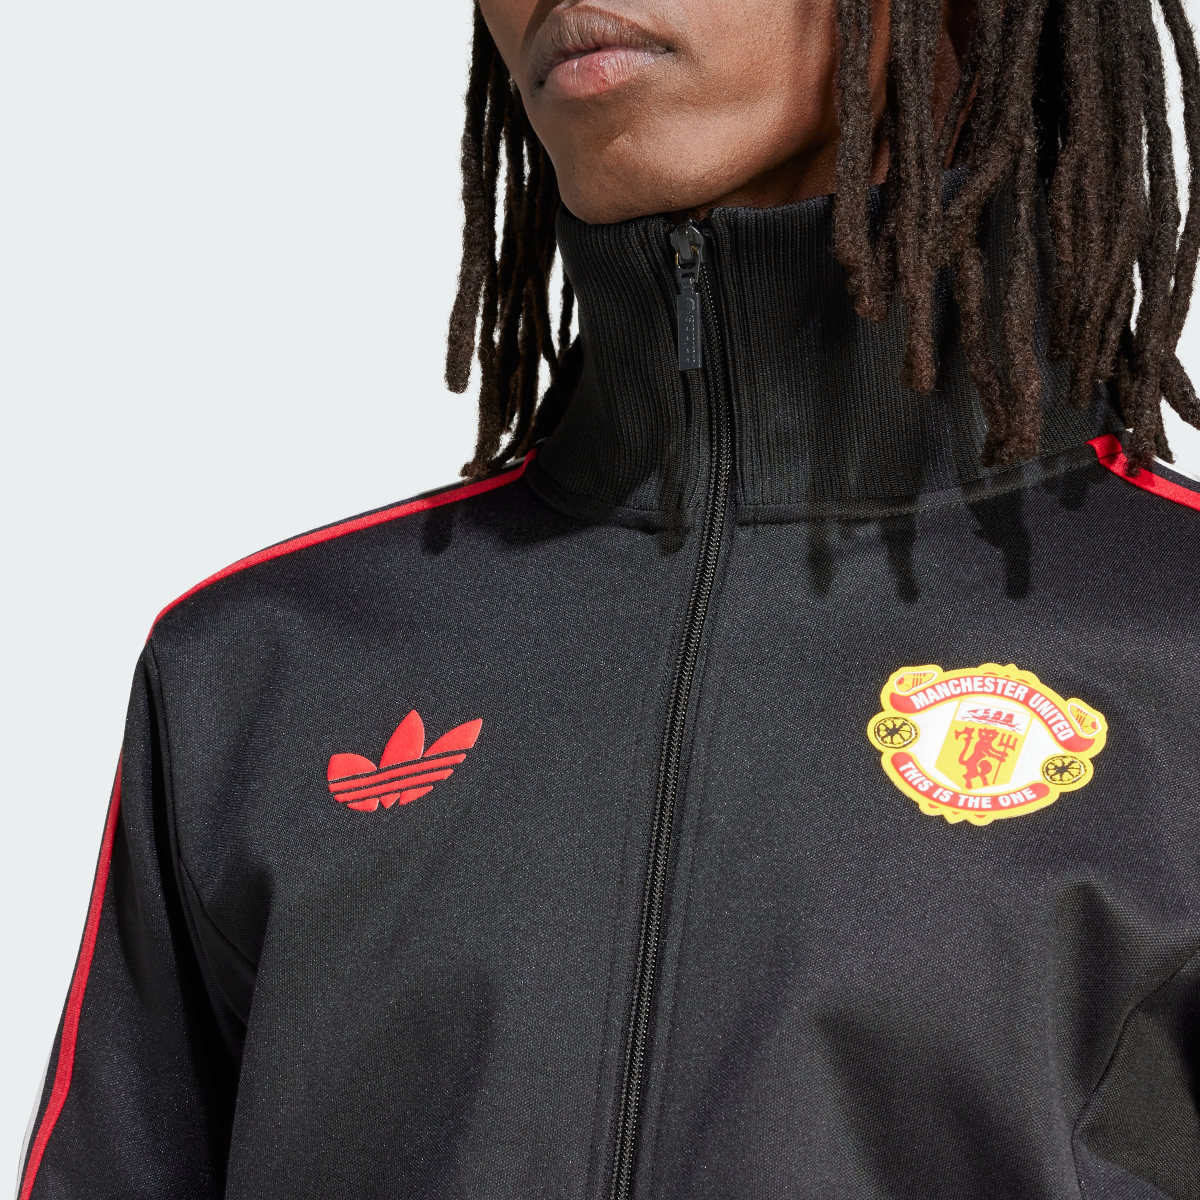 Adidas Veste de survêtement Manchester United Stone Roses Originals. 6